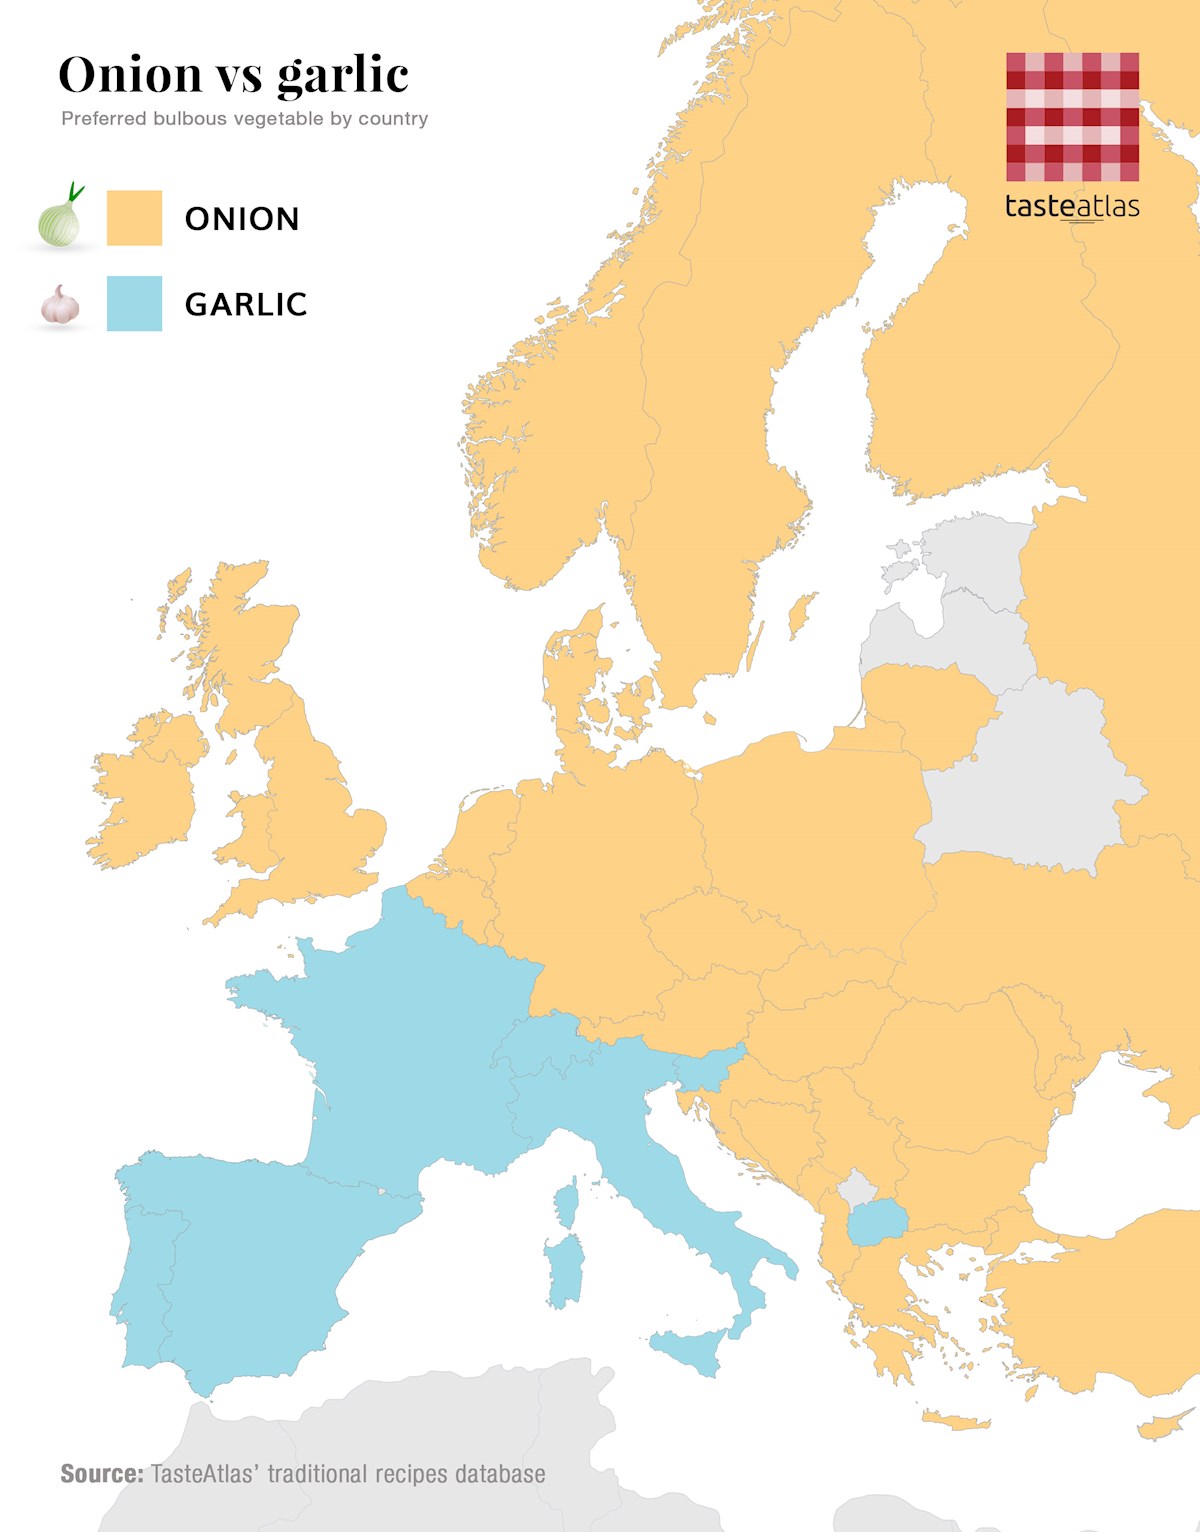 Preferred bulbous vegetable in each European country